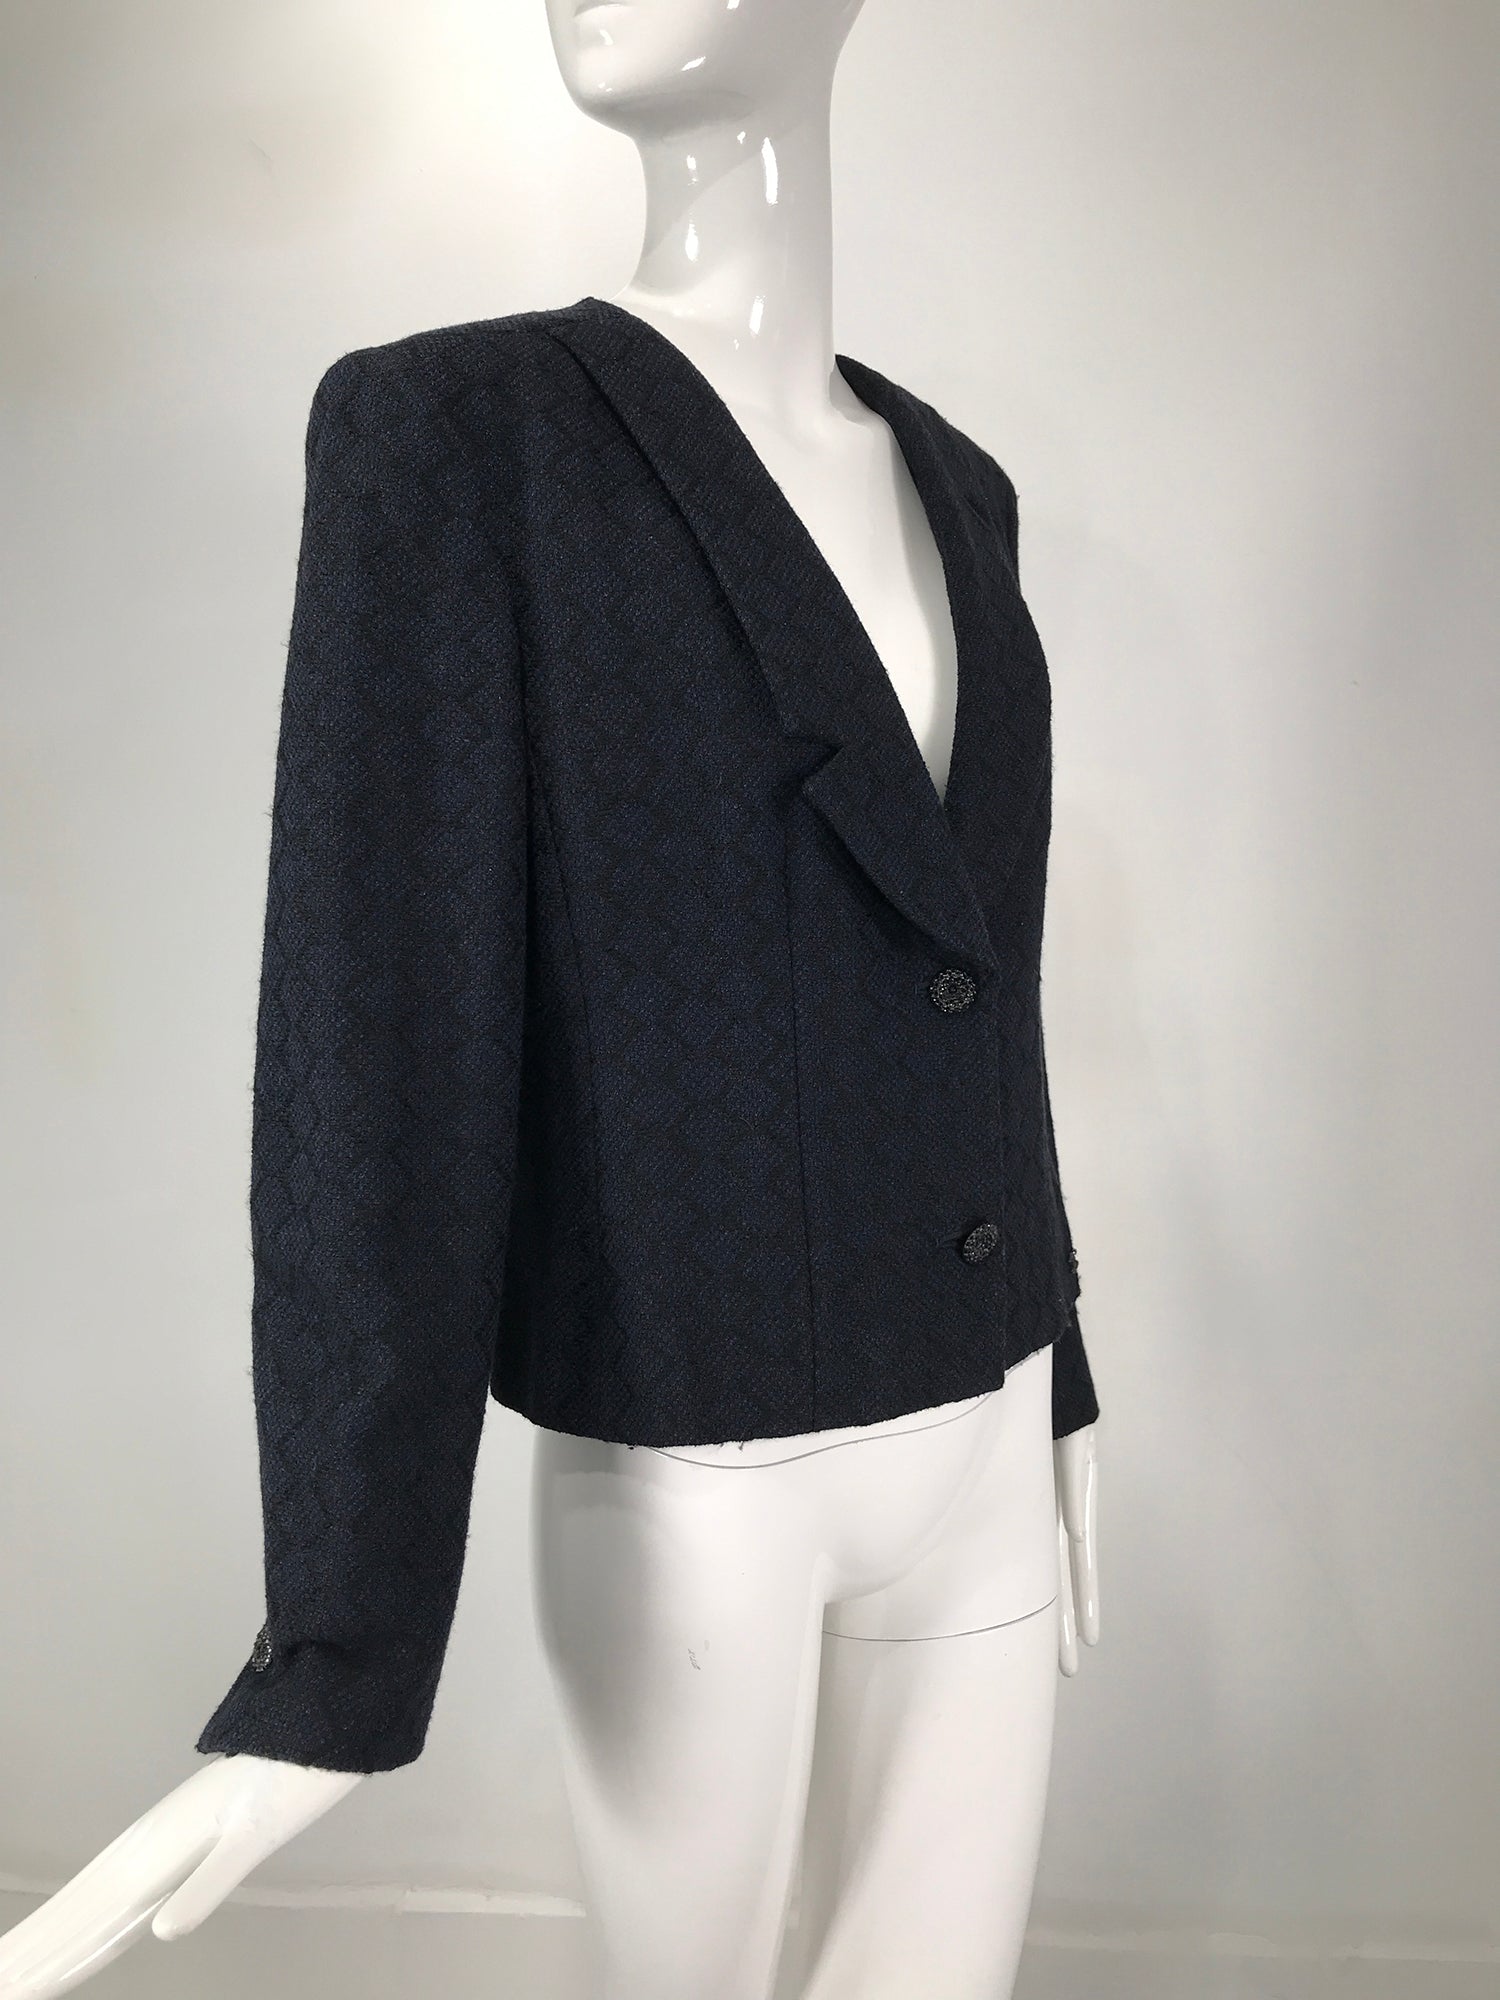 CHANEL Blazers & Suit Jackets for Women - Poshmark